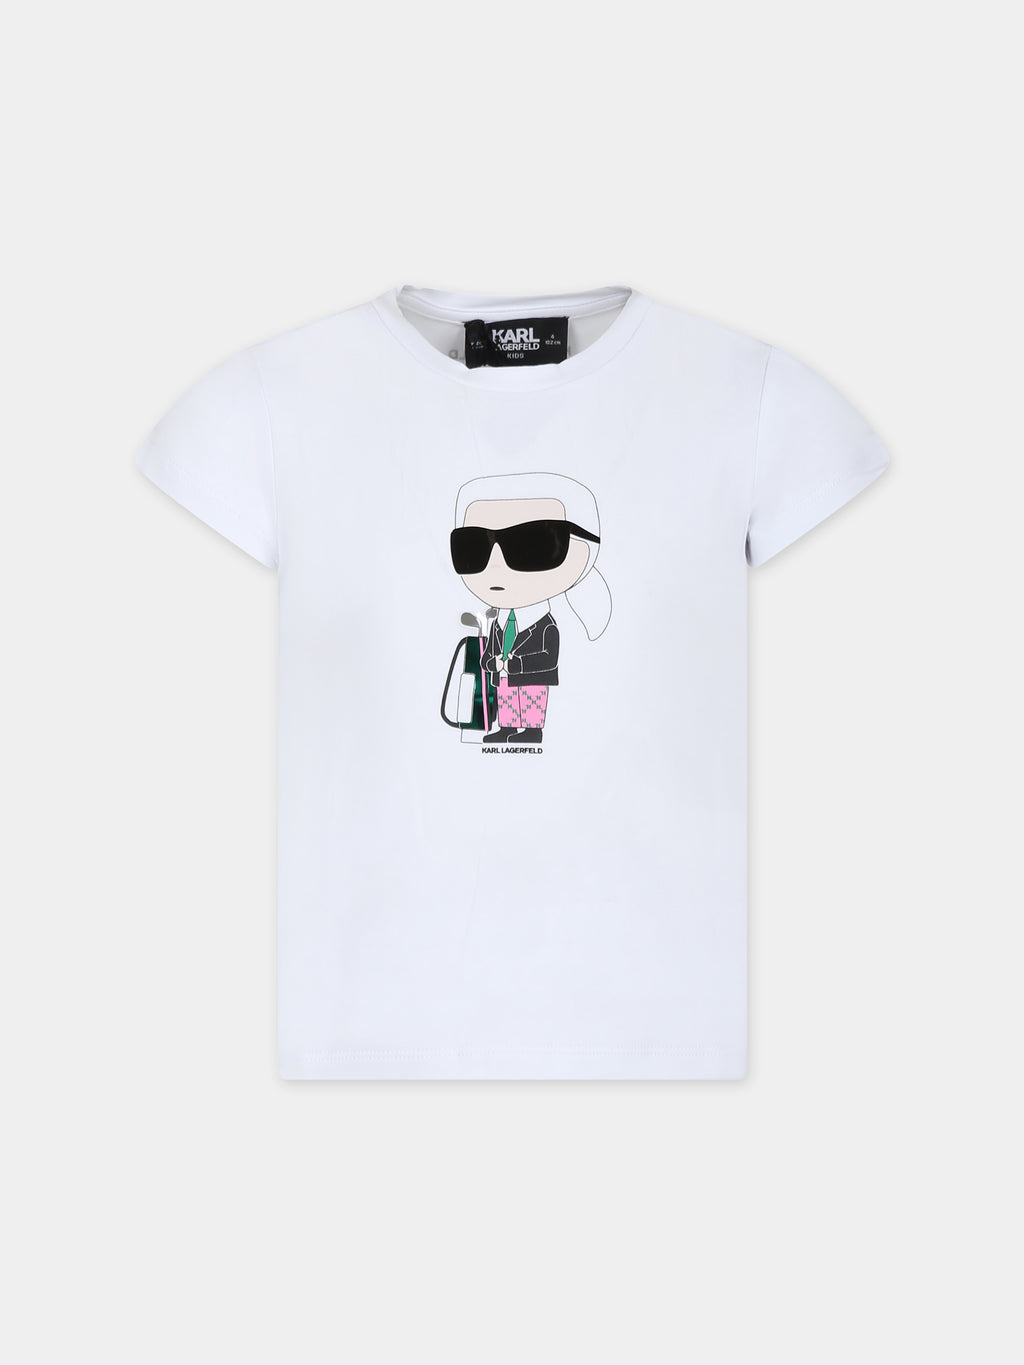 White t-shirt for girl with Karl and golf bag print